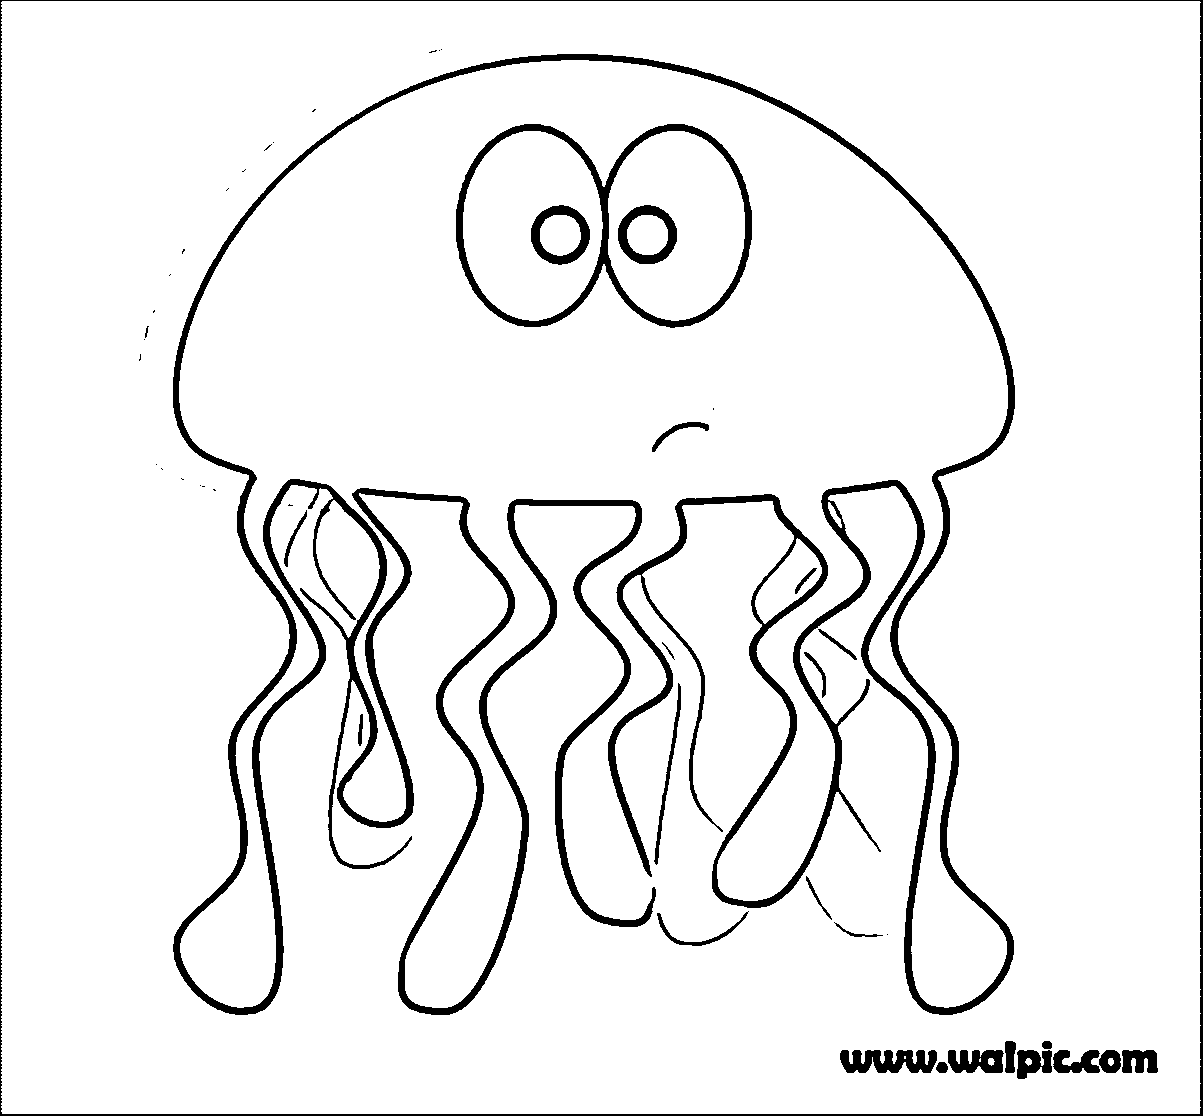 Jellyfish clipart wecoloringpage